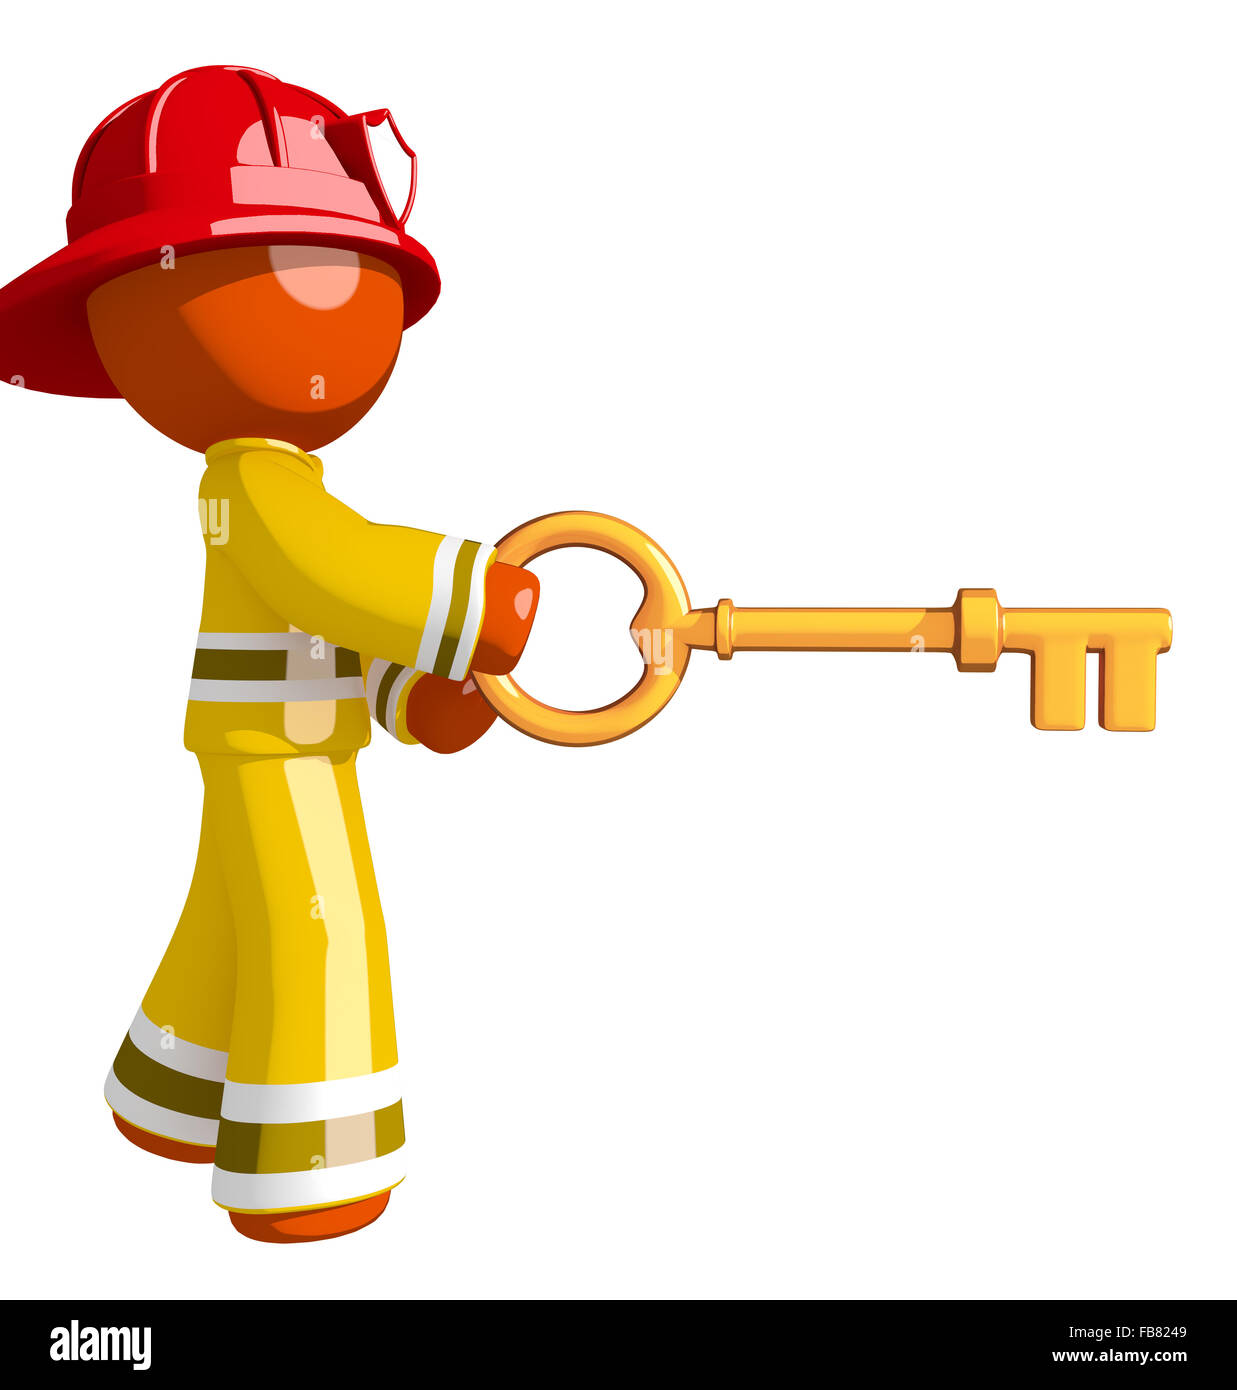 Orange man firefighter using oversized gold key. Stock Photo